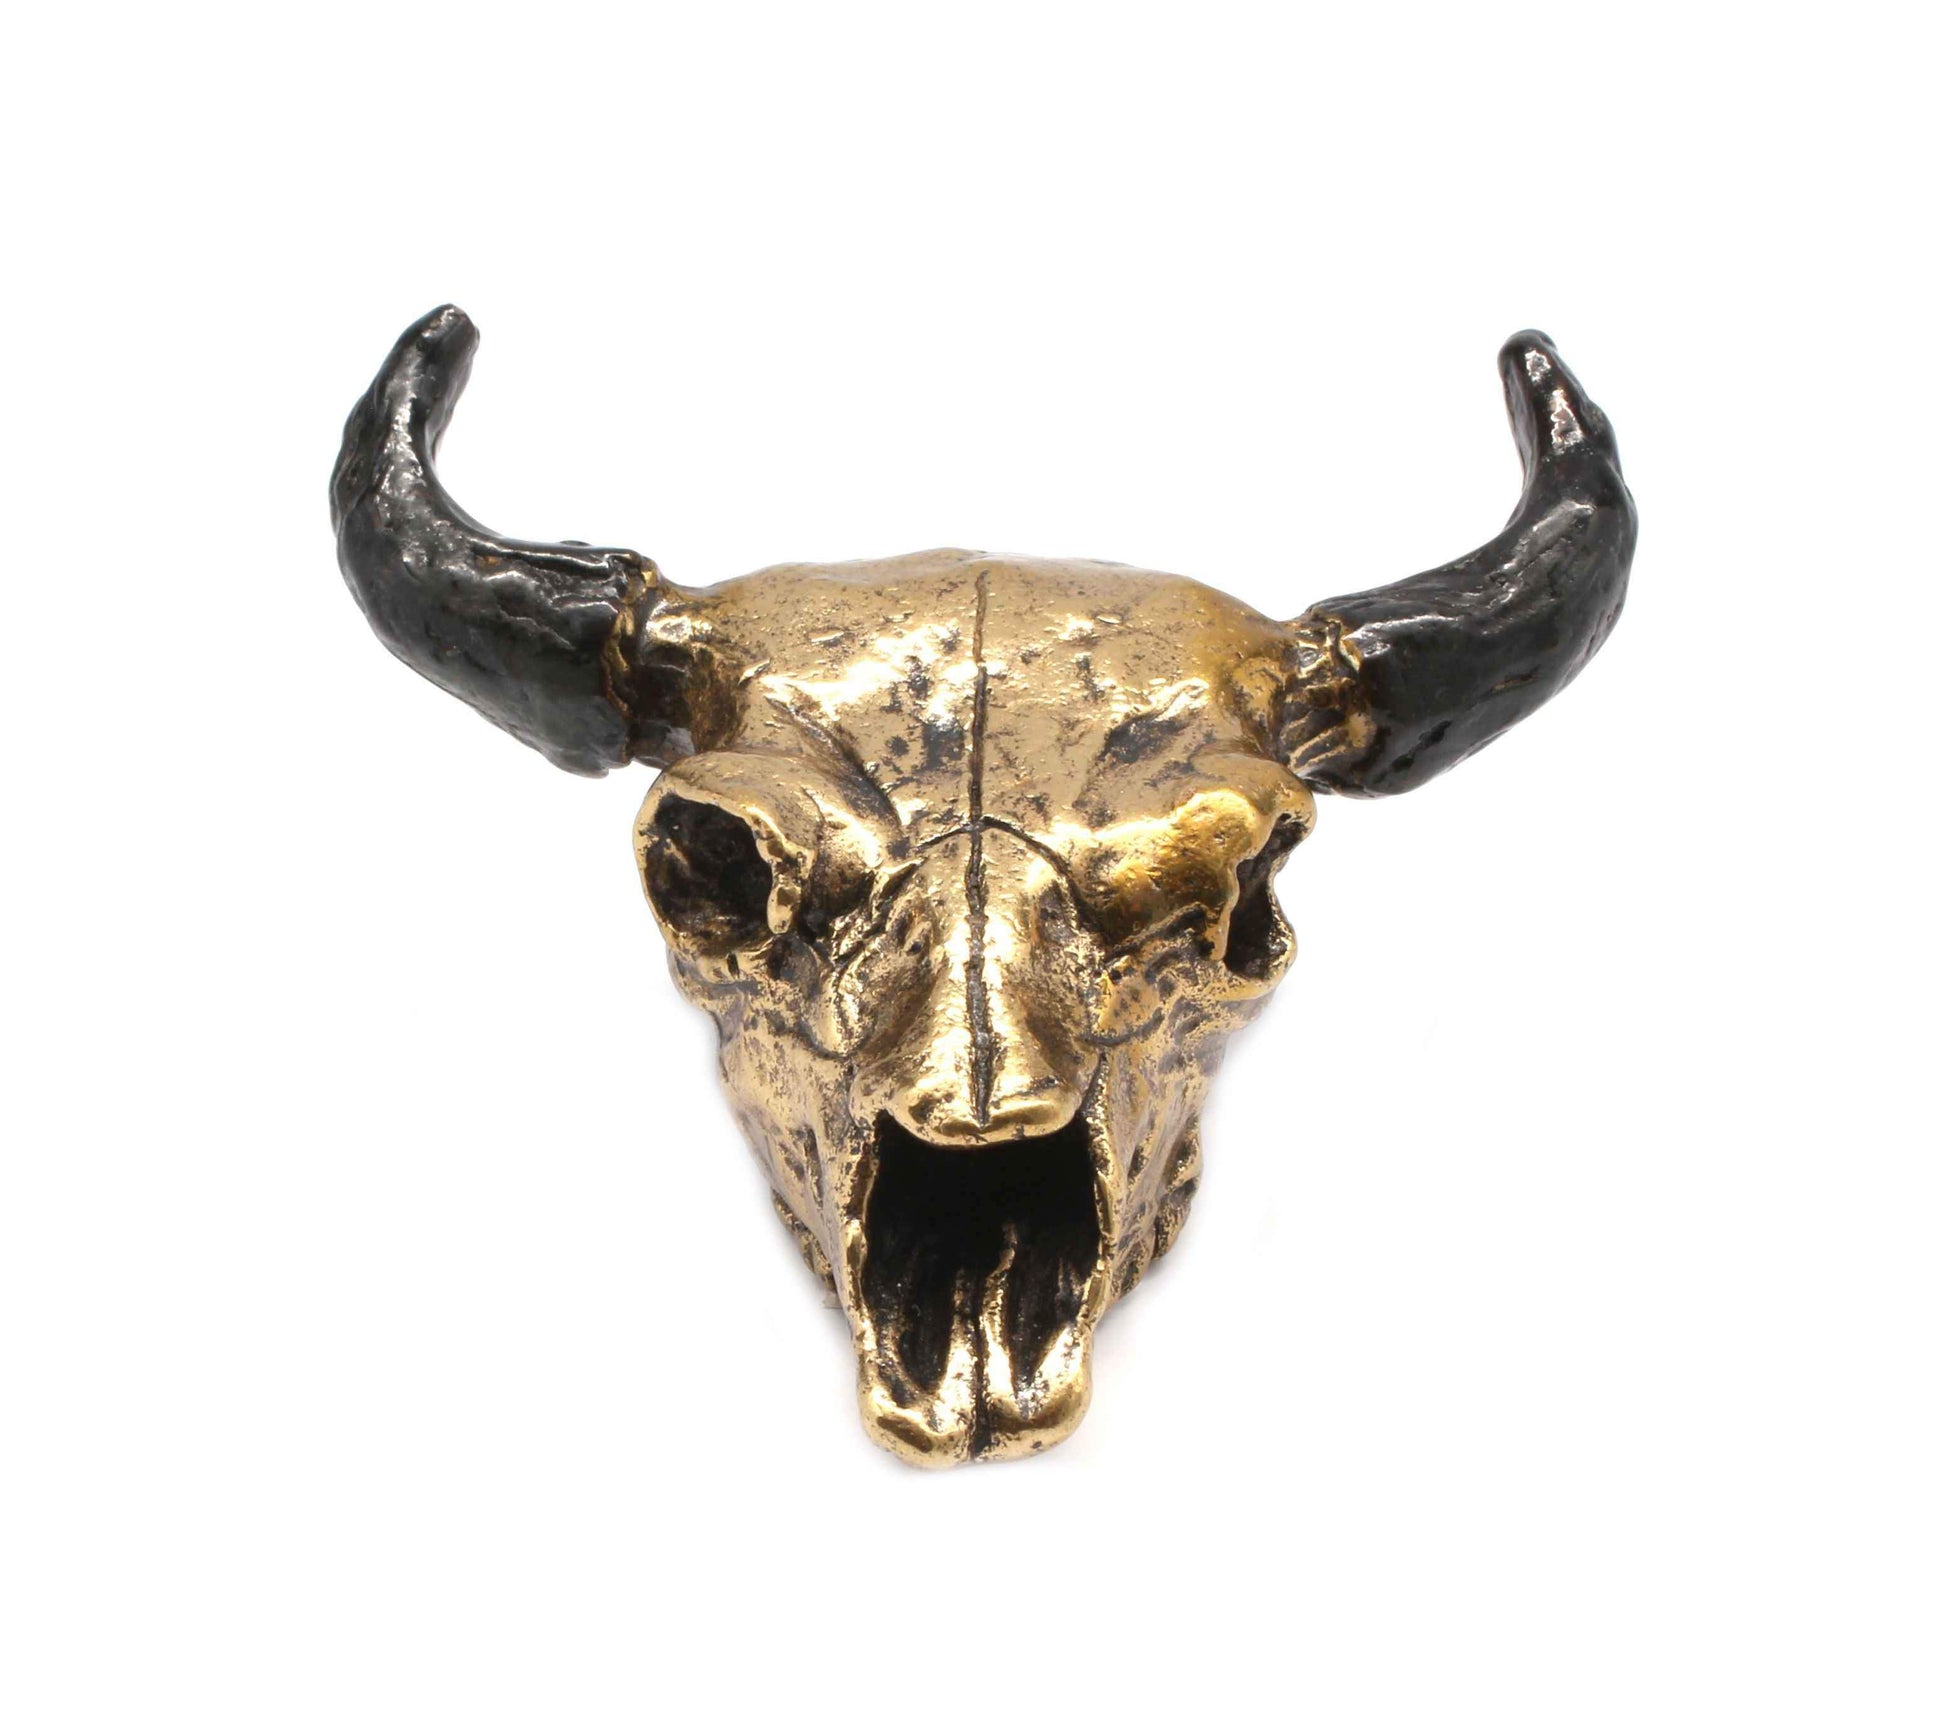 Jim Eppler-Miniature Bison Skull-Sorrel Sky Gallery-Sculpture